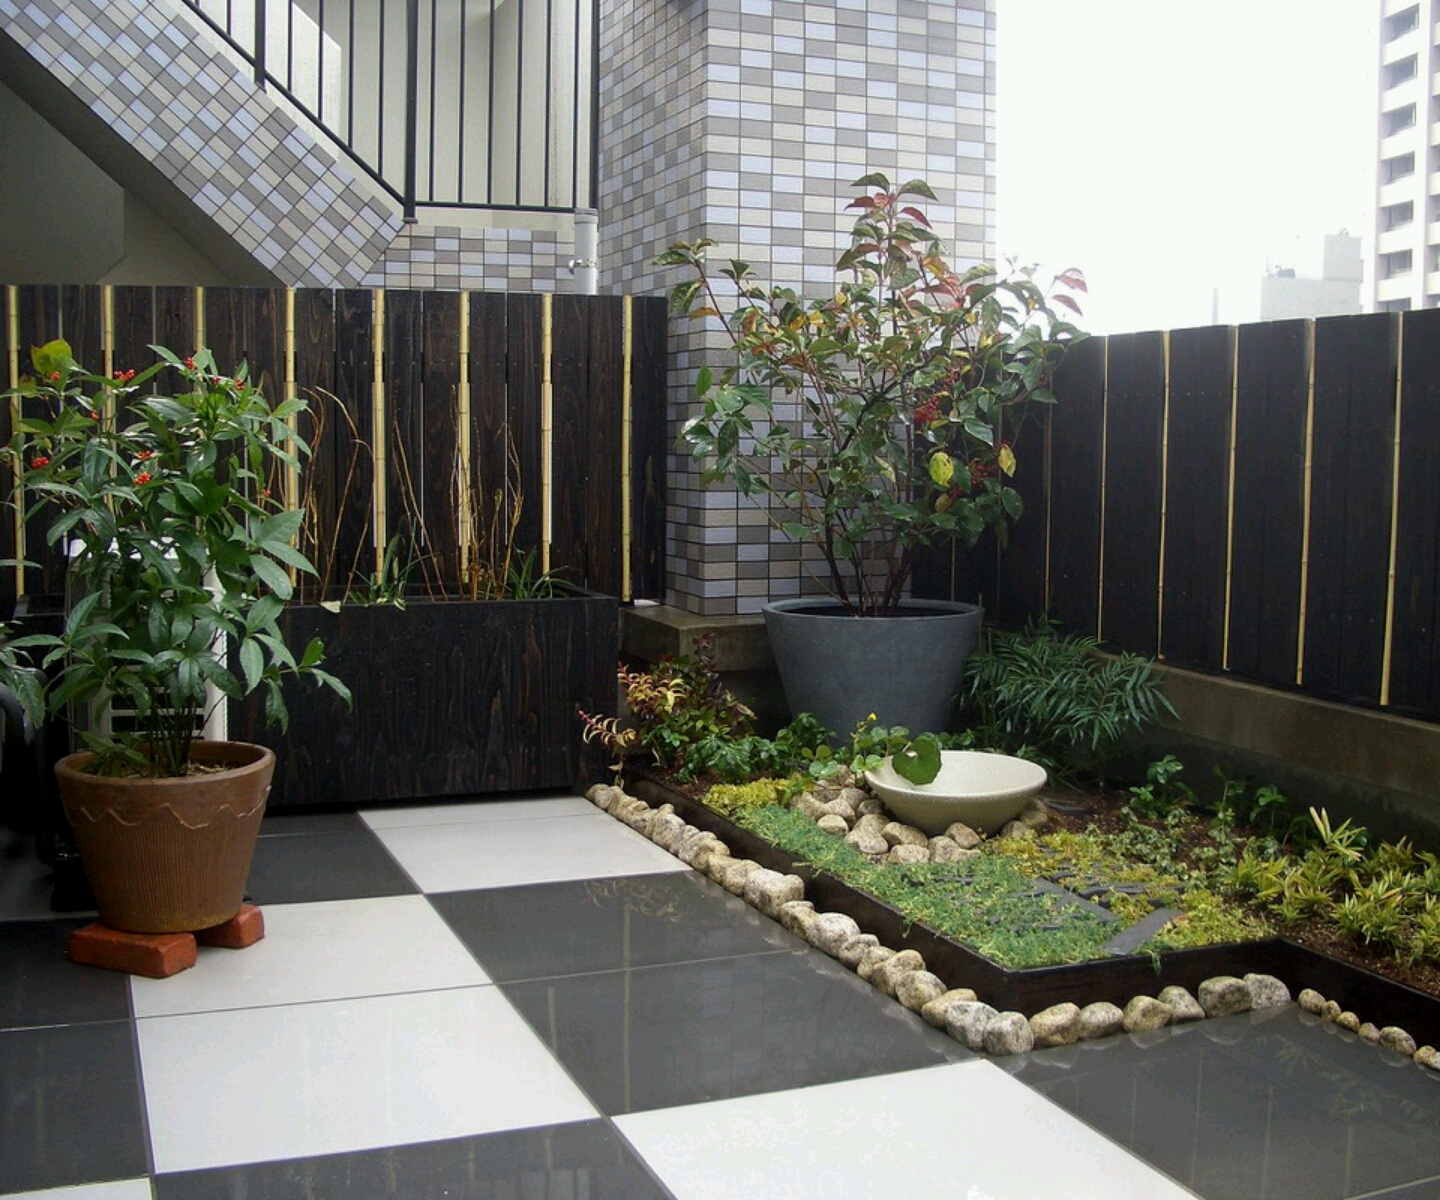 New home designs latest.: Modern homes garden designs ideas.